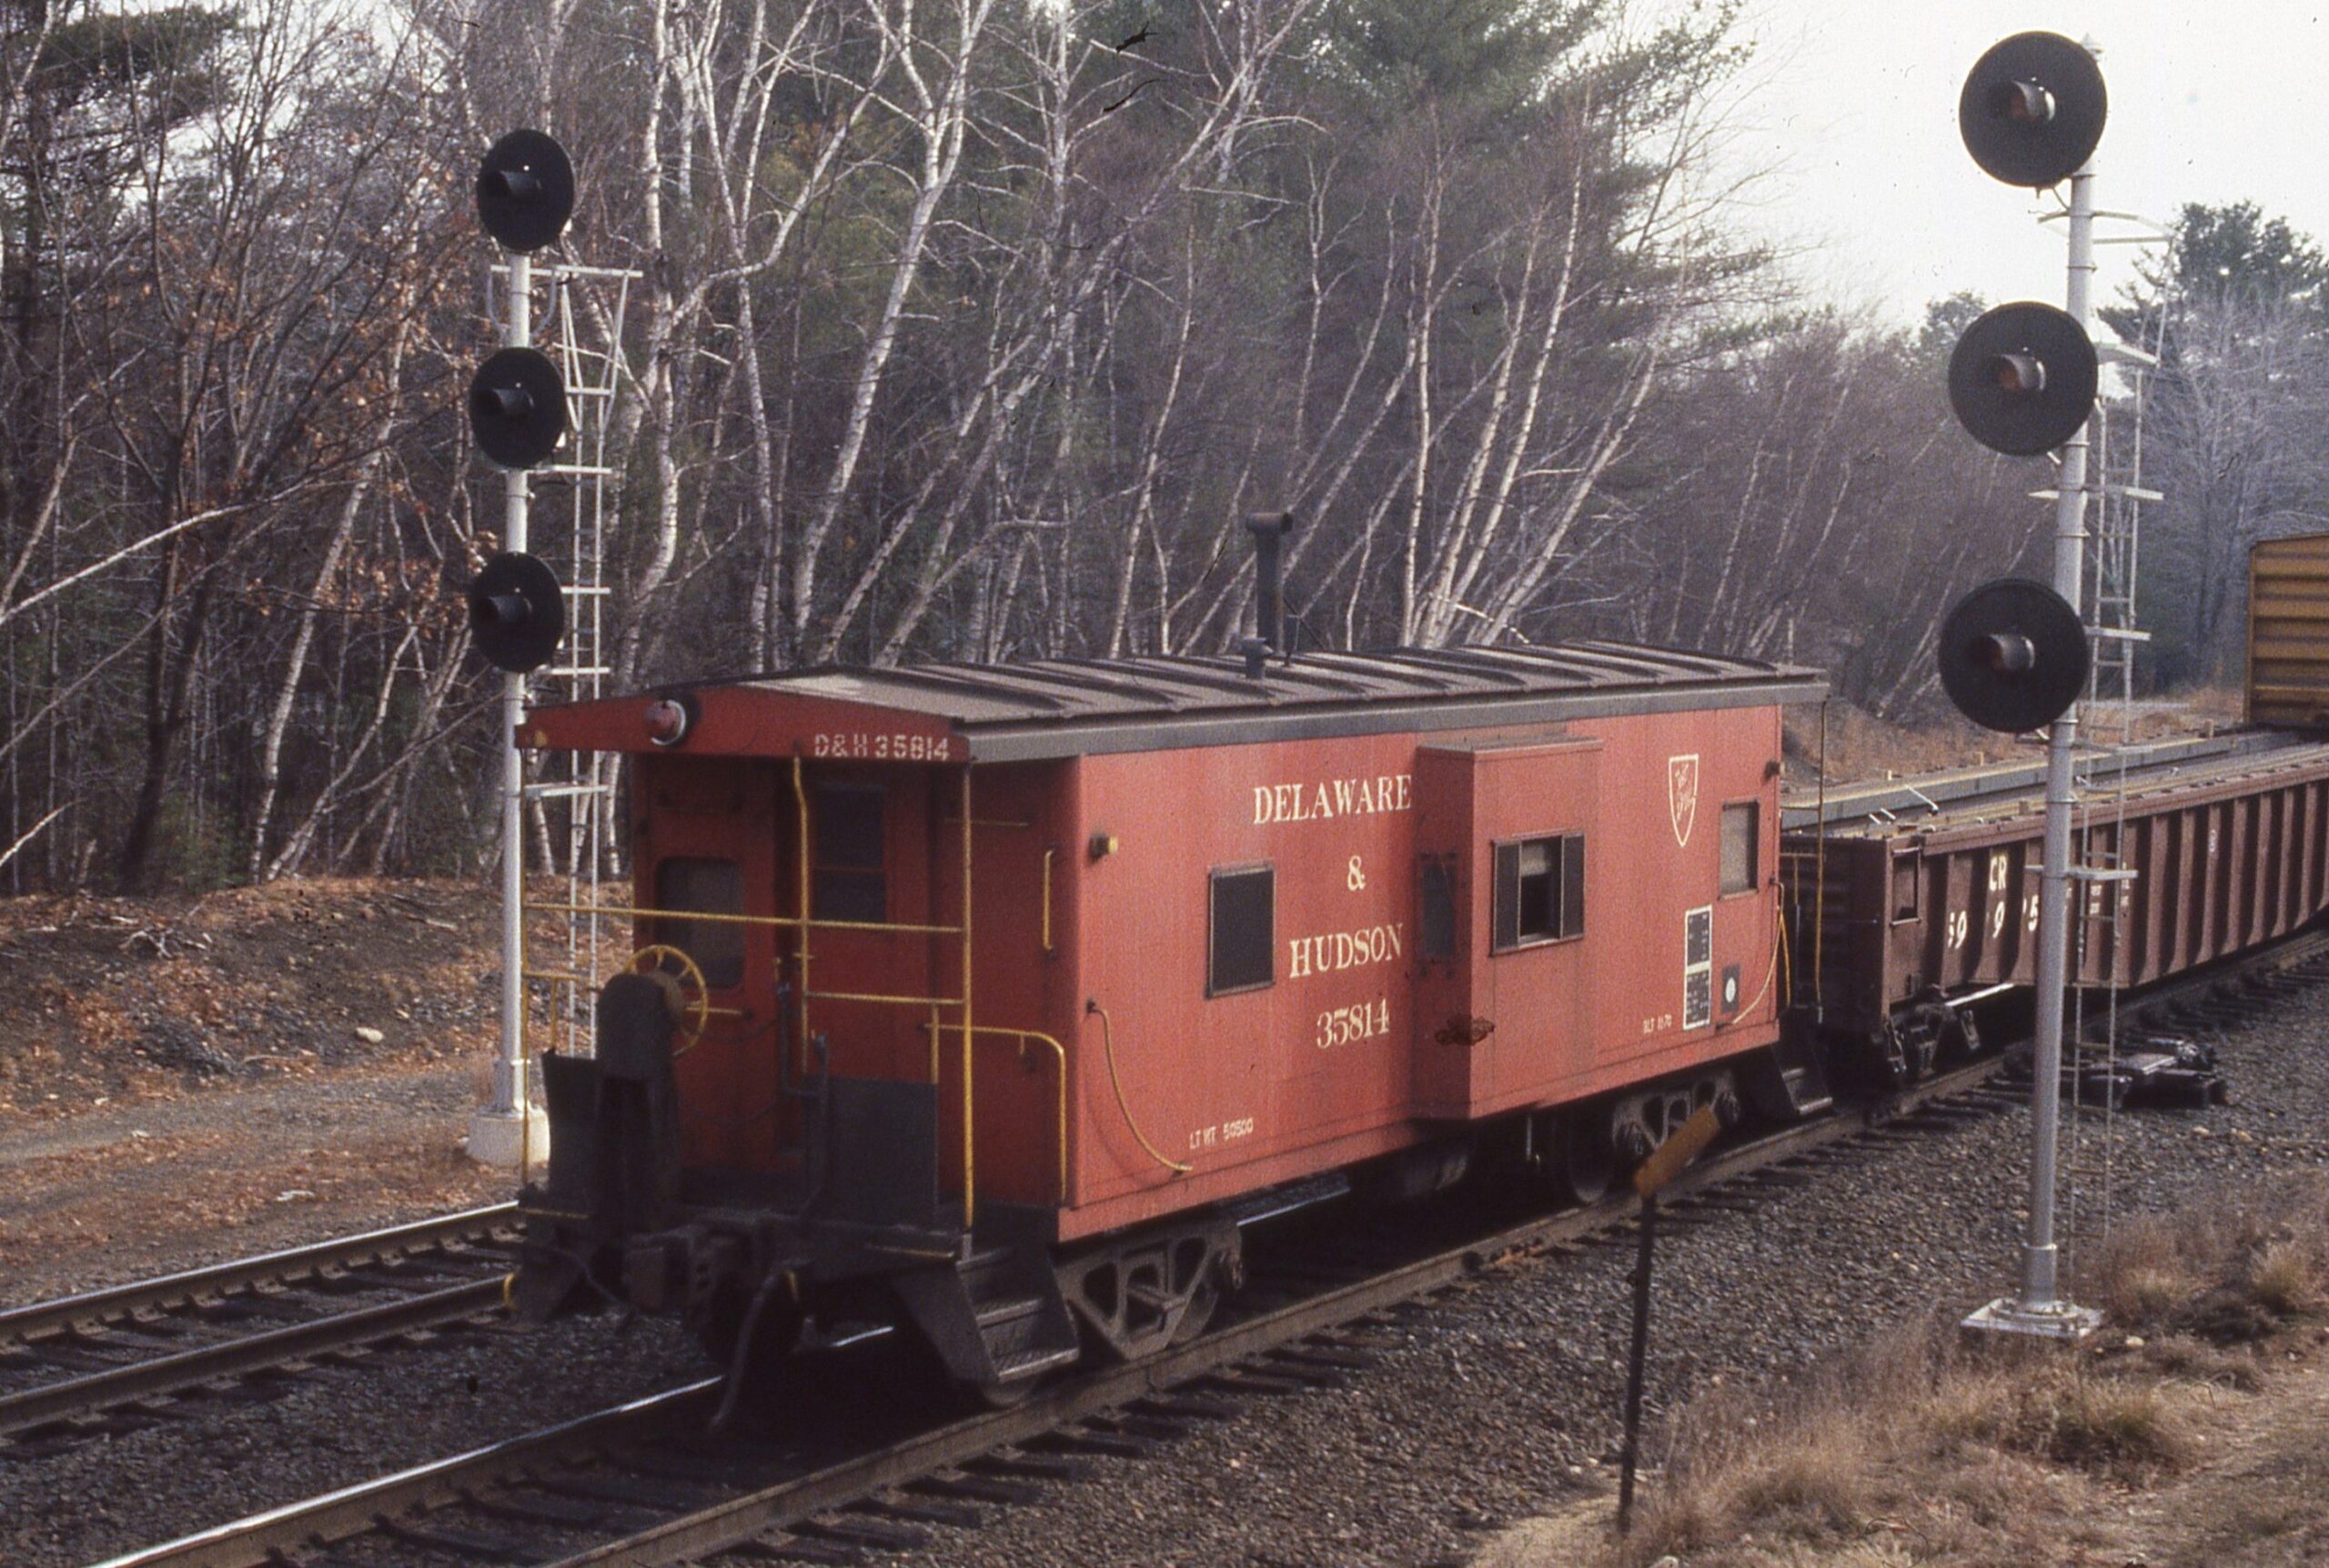 Delaware and Hudson Railway | Westminster, Massachusetts | Bay Window caboose #35814 | November 11, 1982 | John Wilson Photograph